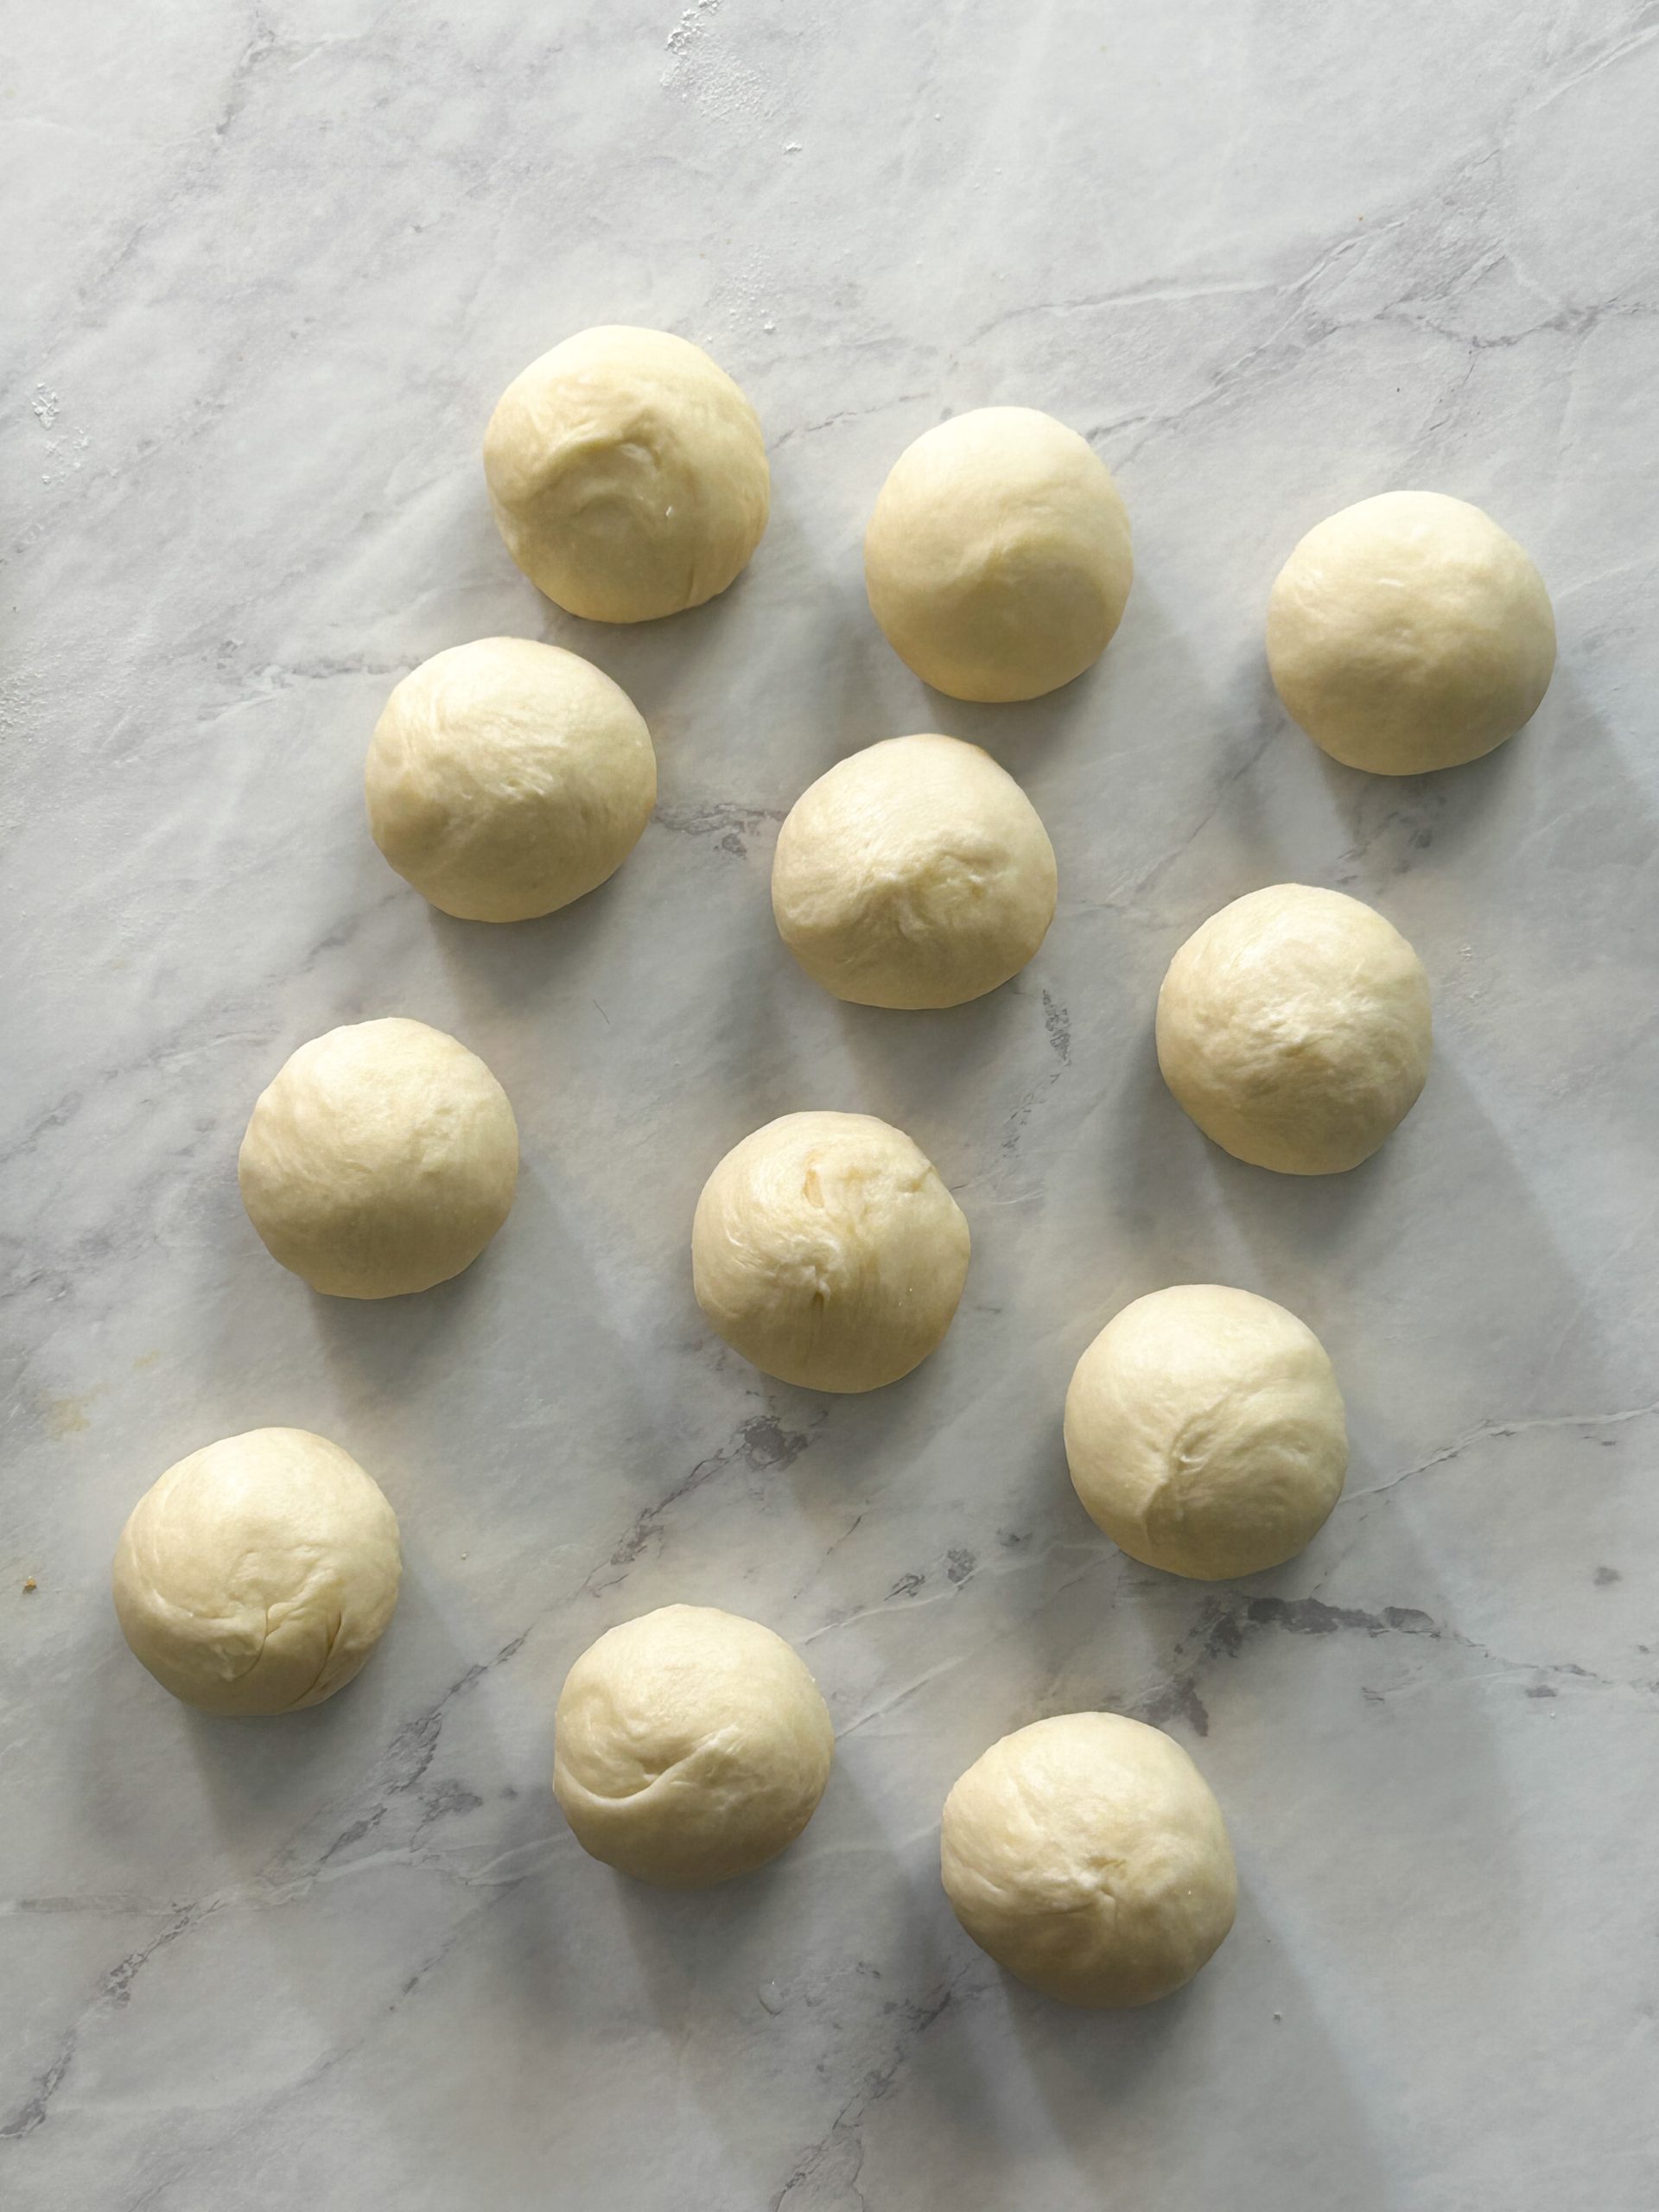 12 dough balls for kachoris laid out neatly